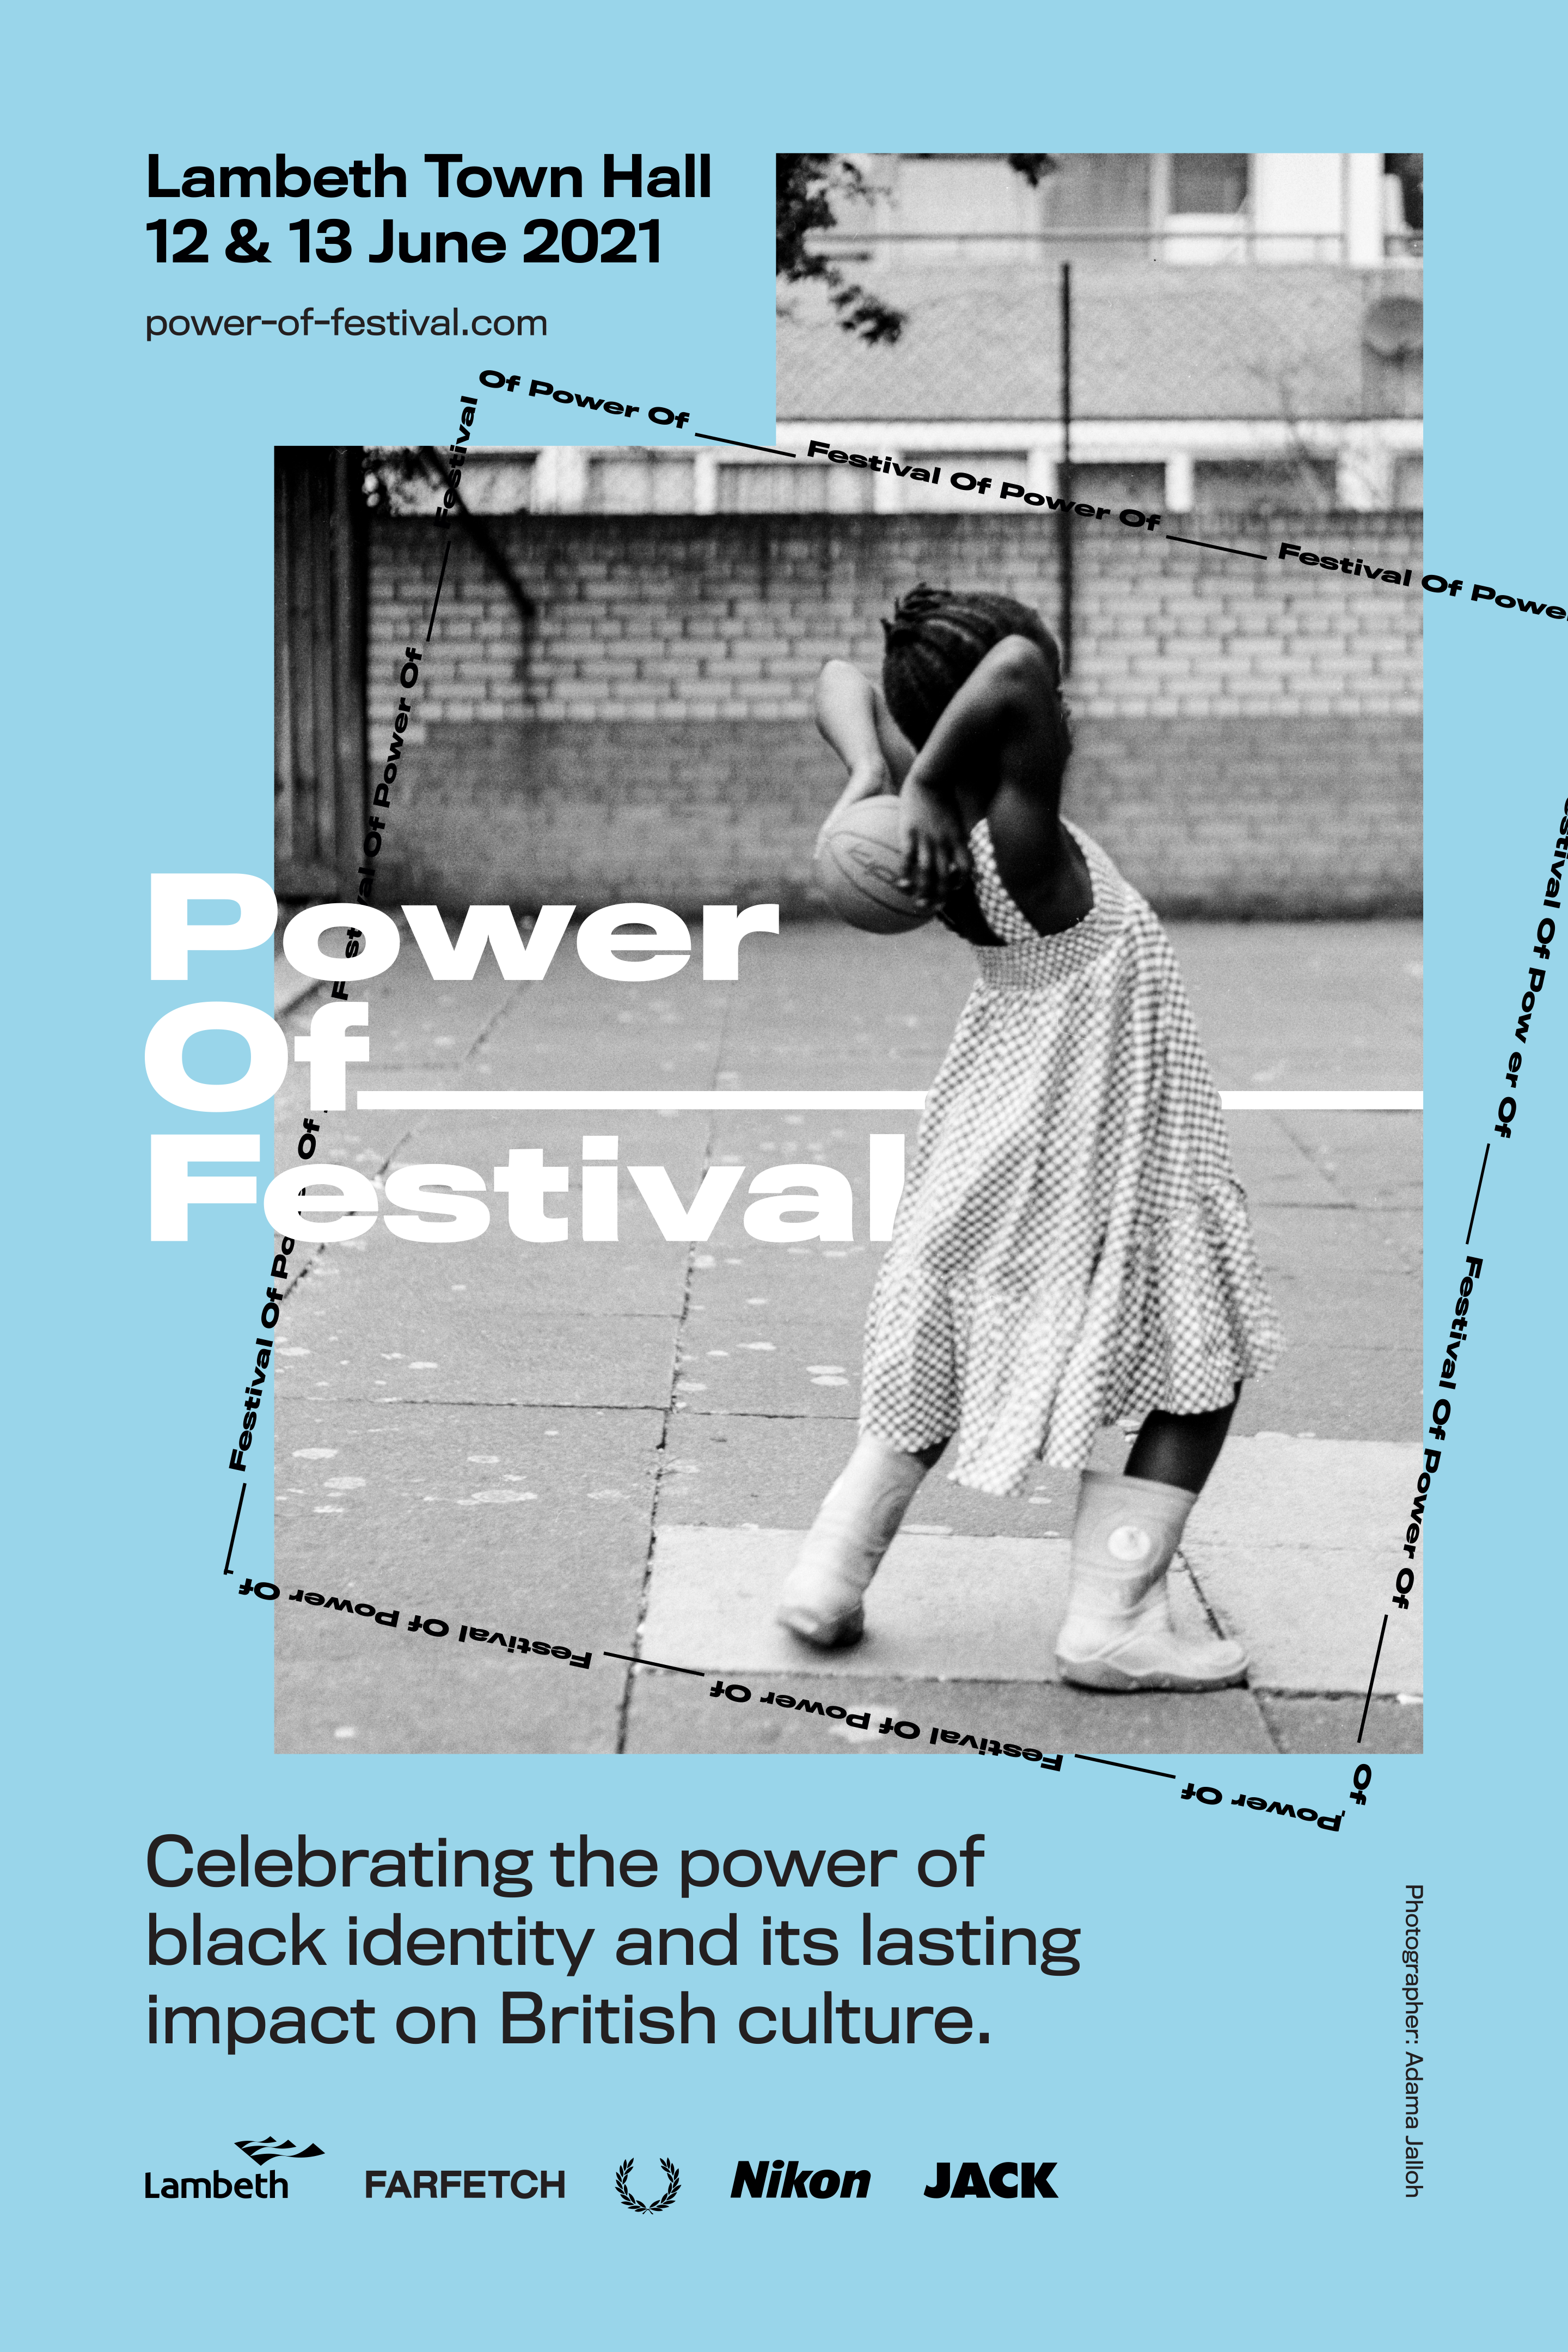 The Power Of __ Festival